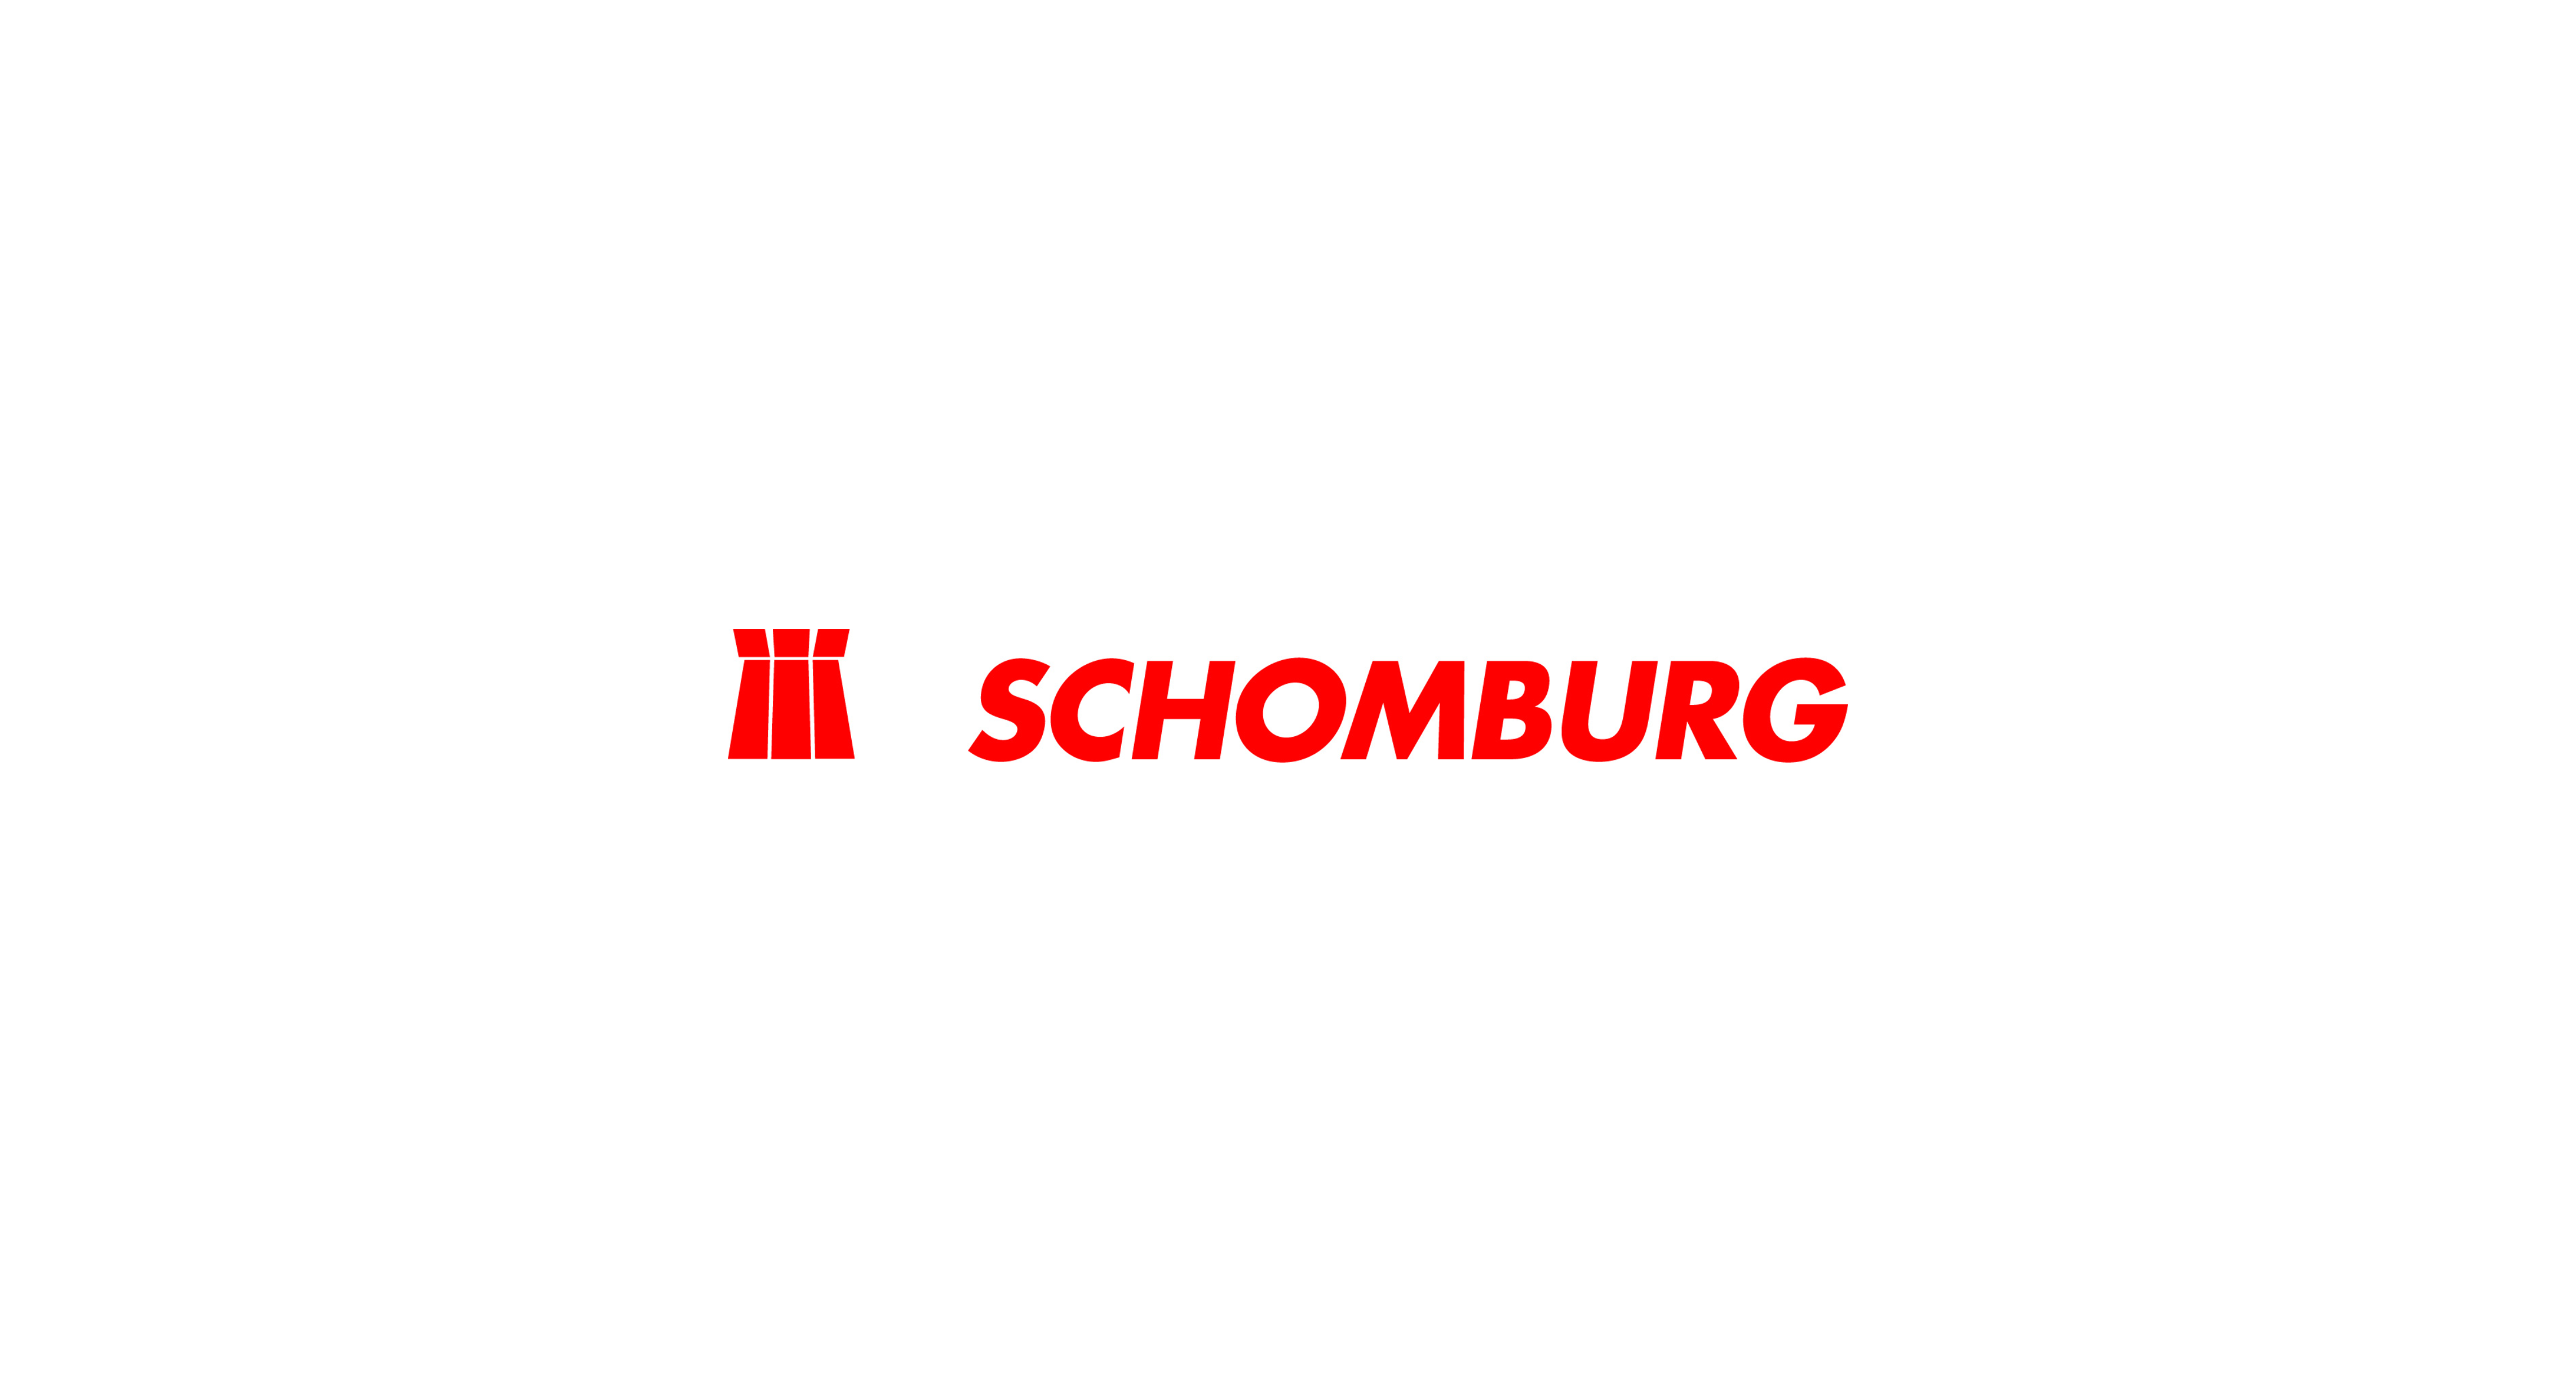 043_schomburg_logo